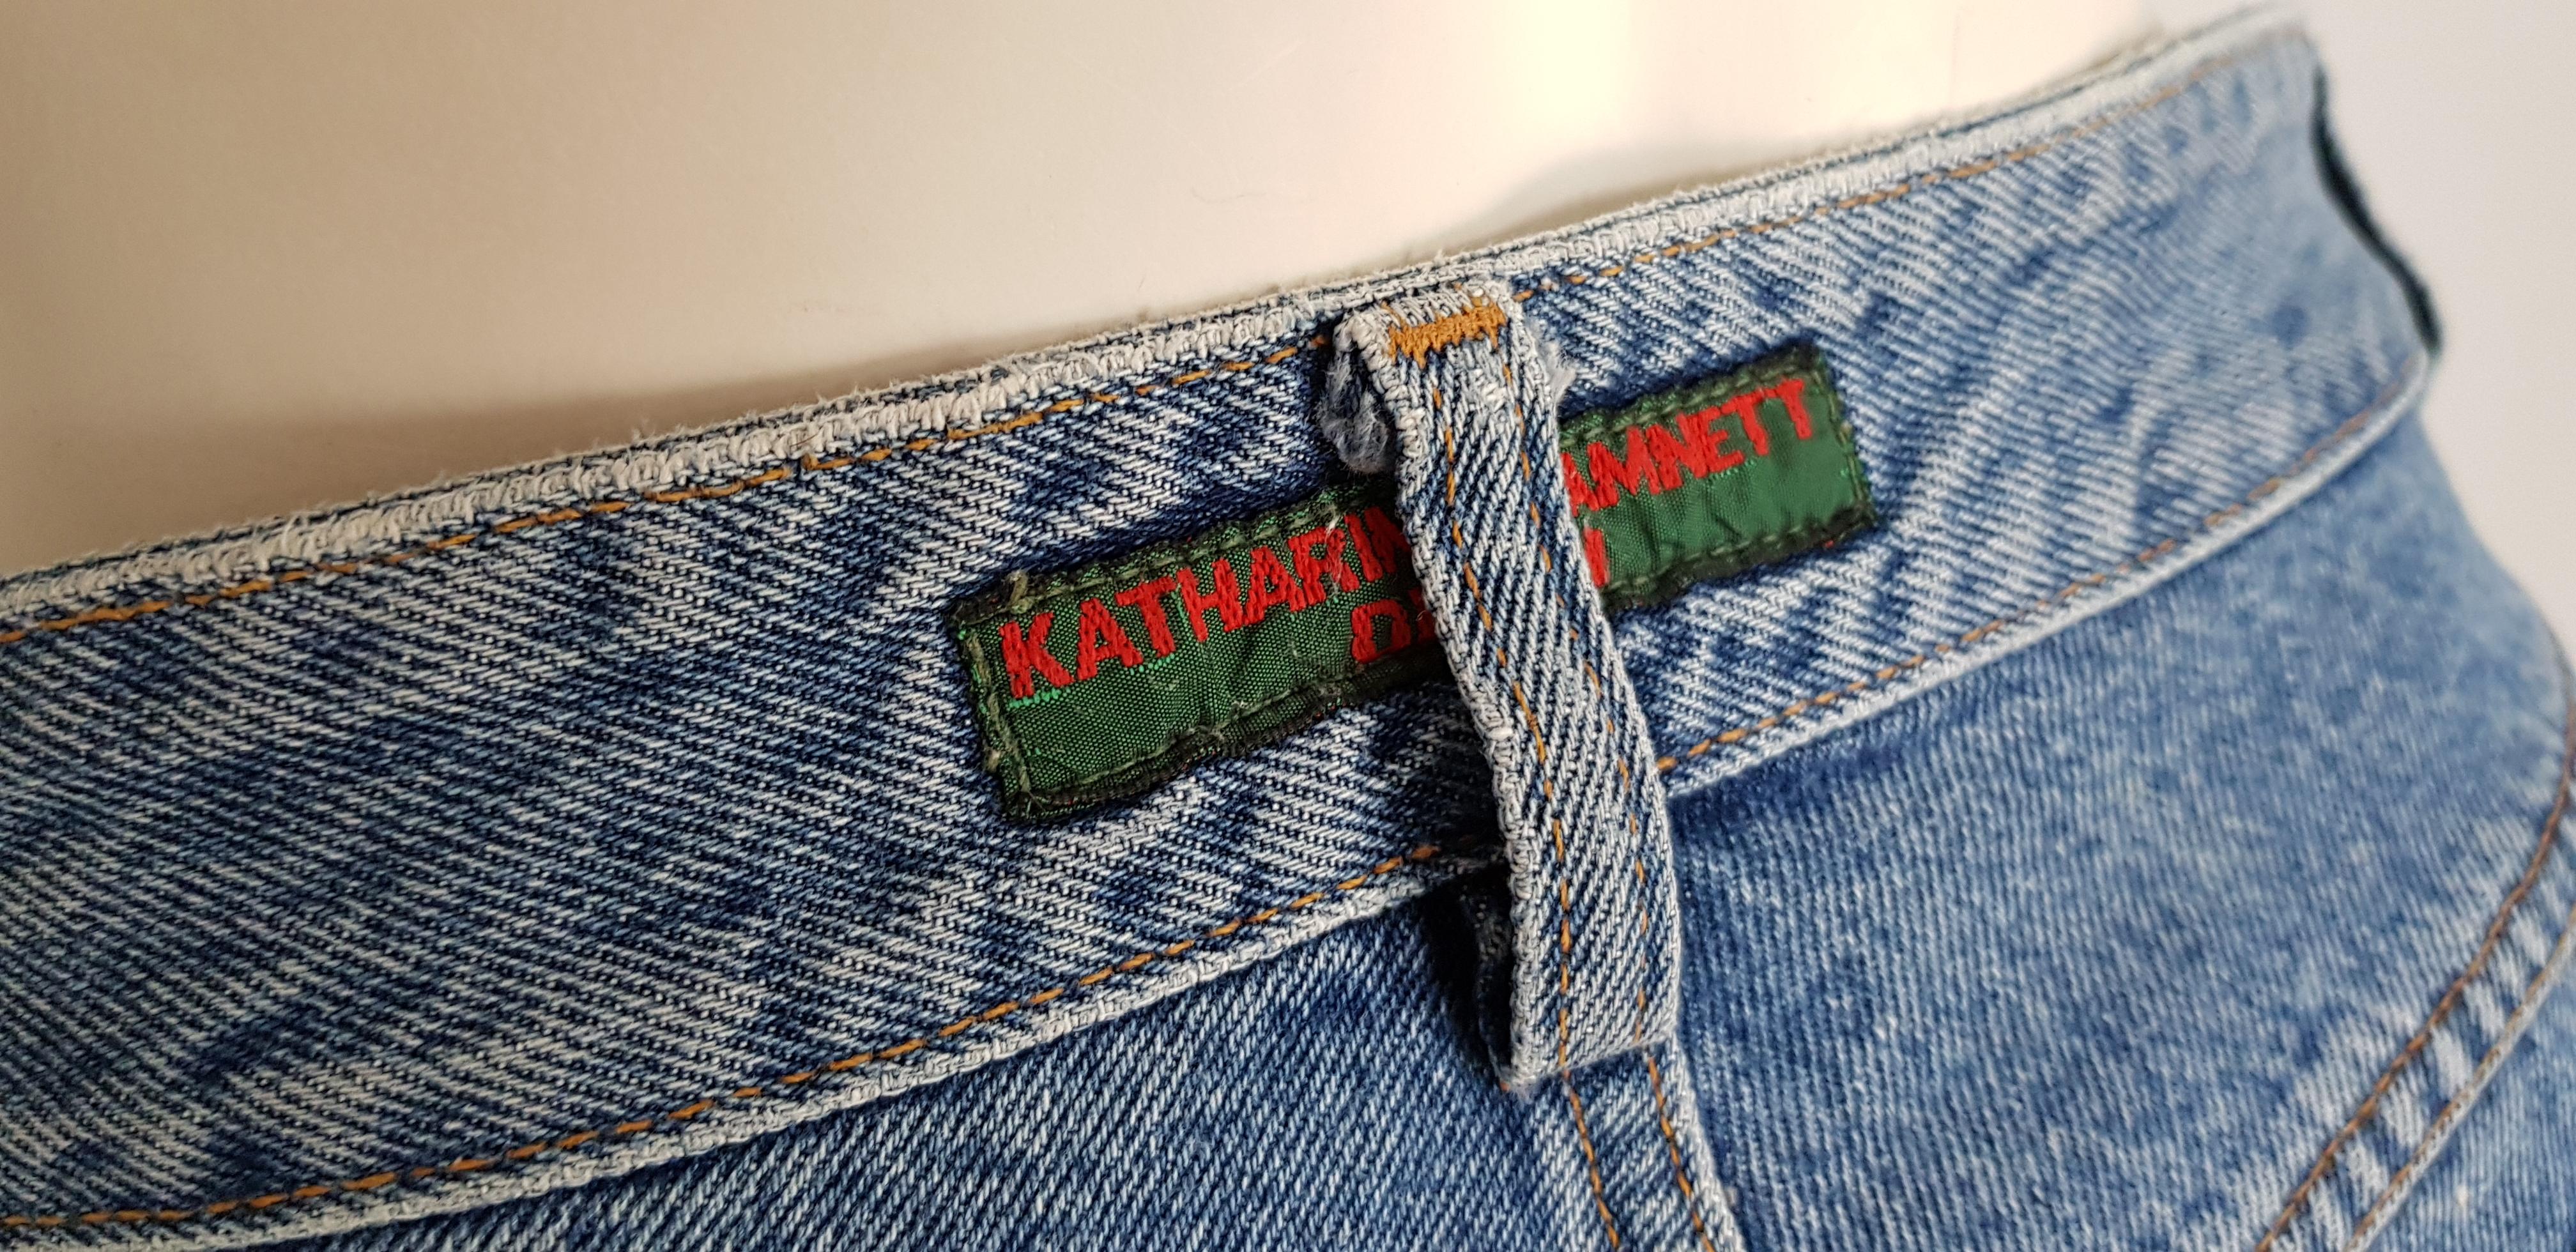 Katharine HAMNETT Jeans Size S / M - Unworn, New For Sale 4